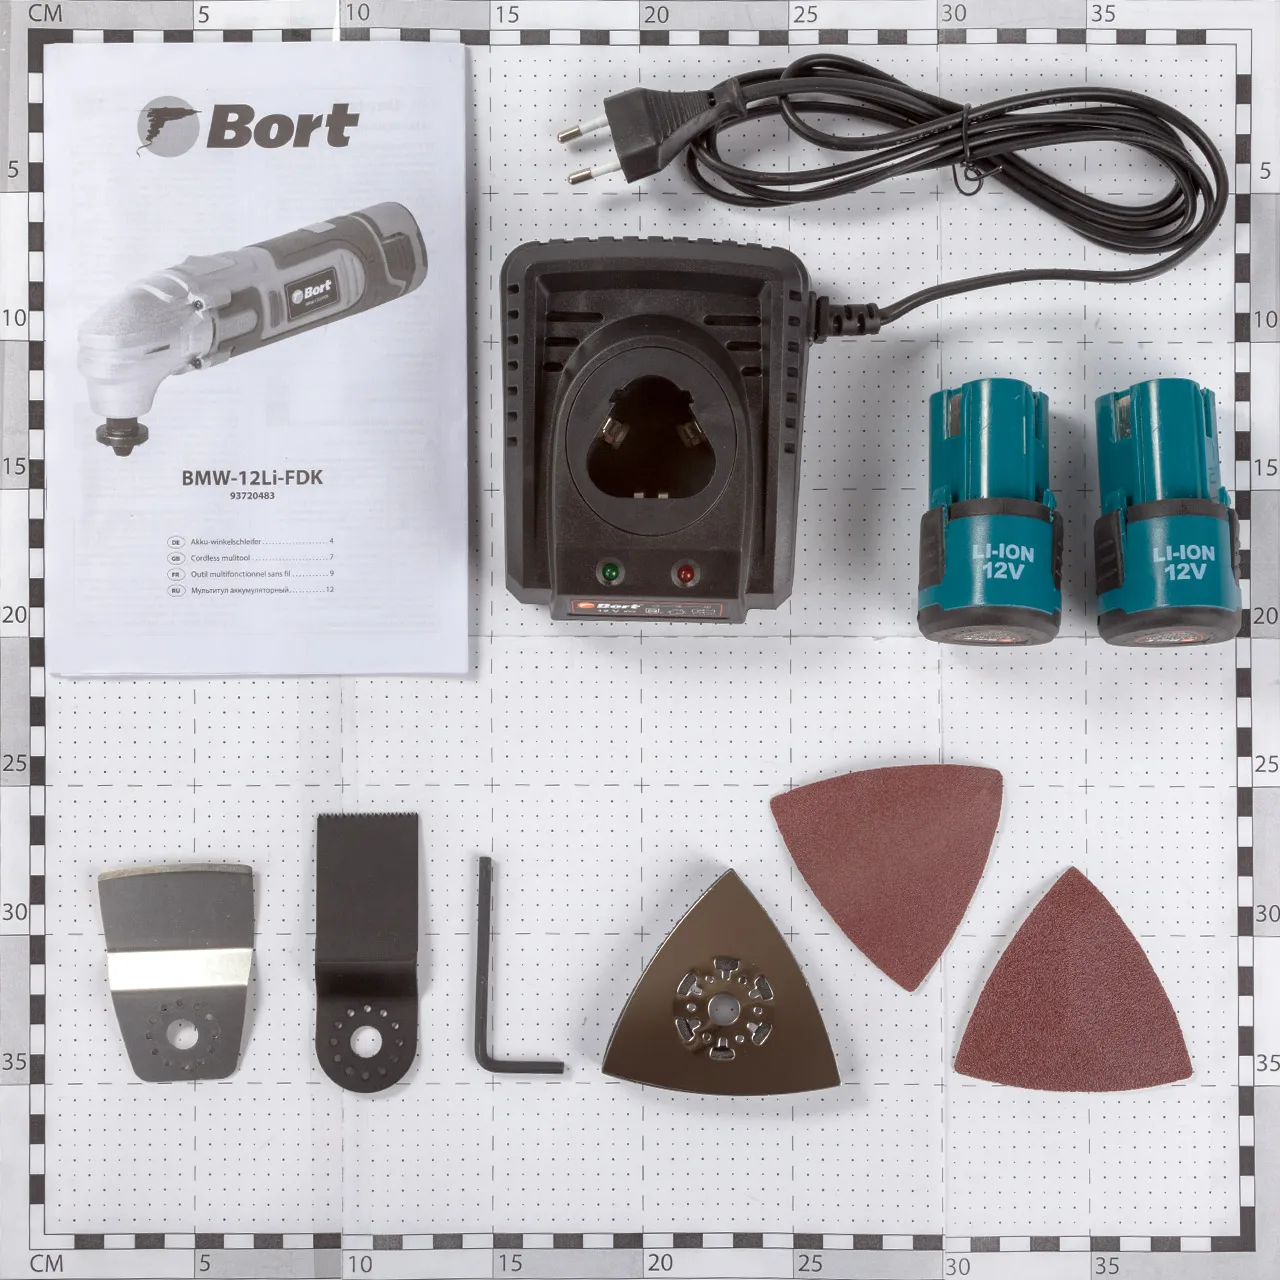 Мультитул аккумуляторный Bort BMW-12Li-FDK(2 Li-ion батареи 12В, регулировка скорости, комплект насадок и сумка